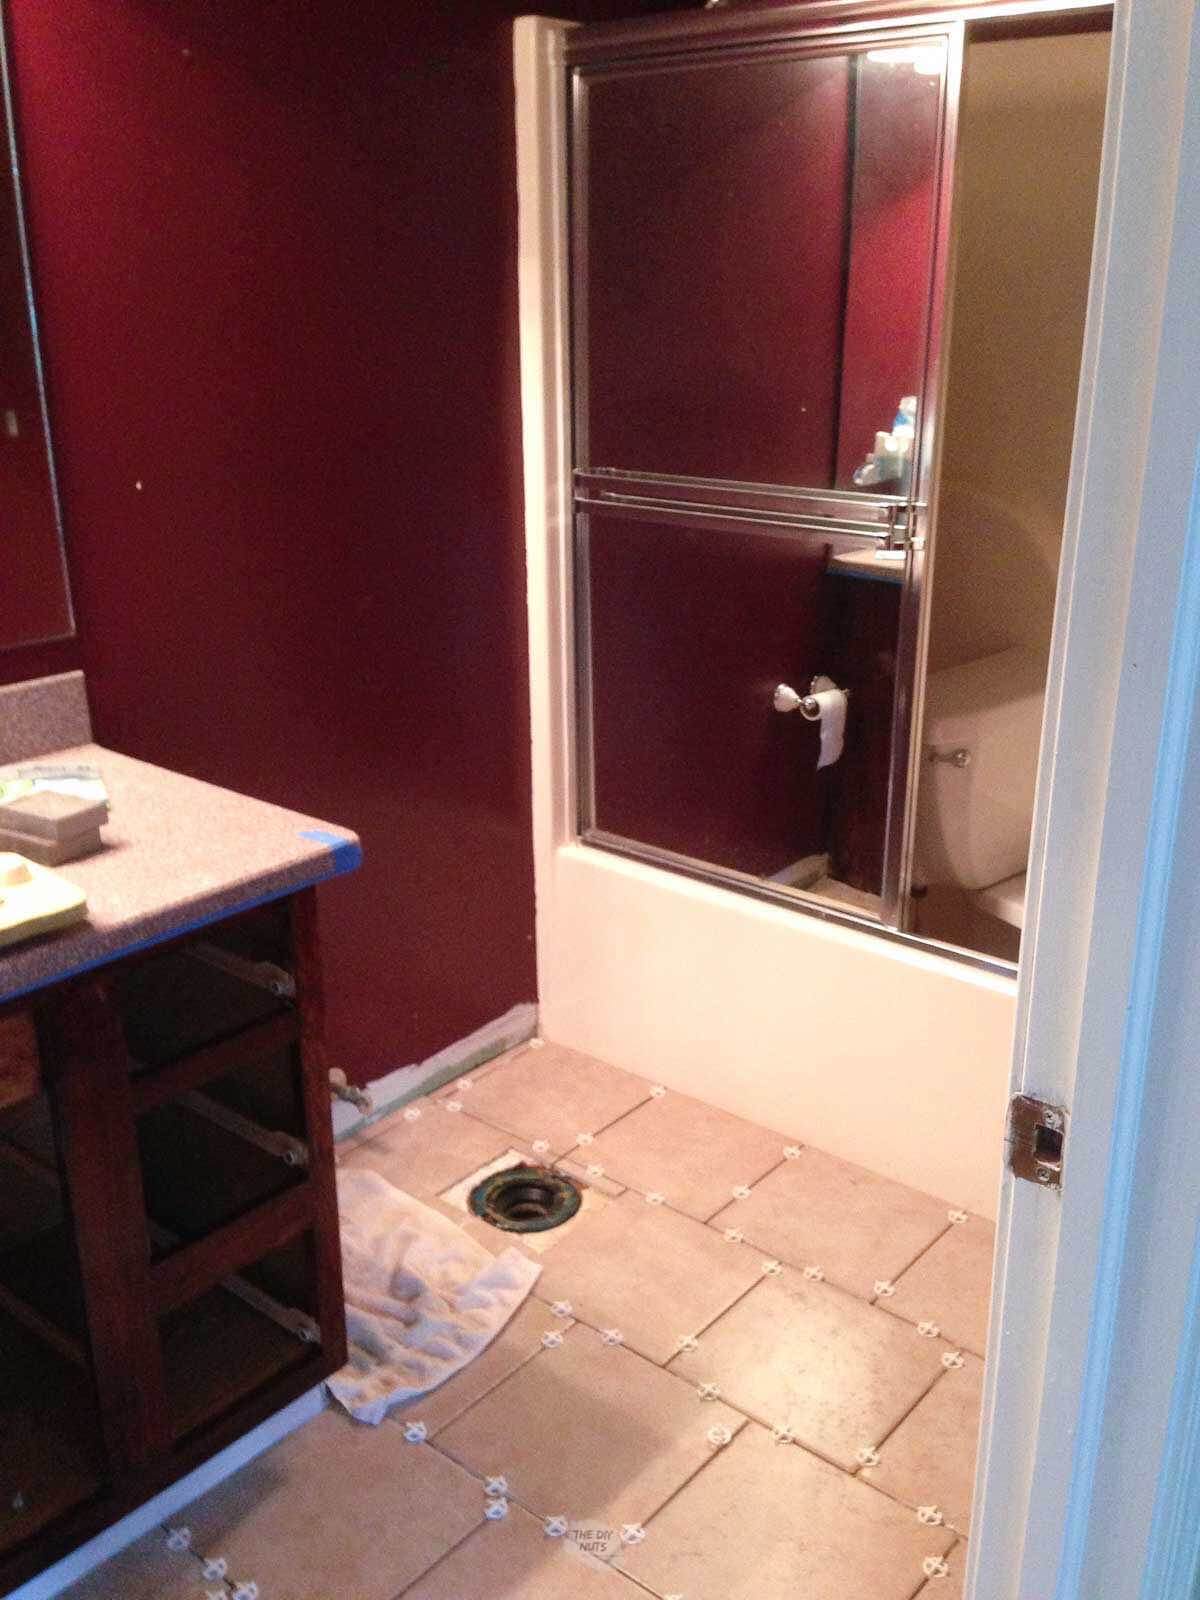 dark red walls, glass shower door with new tile being put down in bathroom.